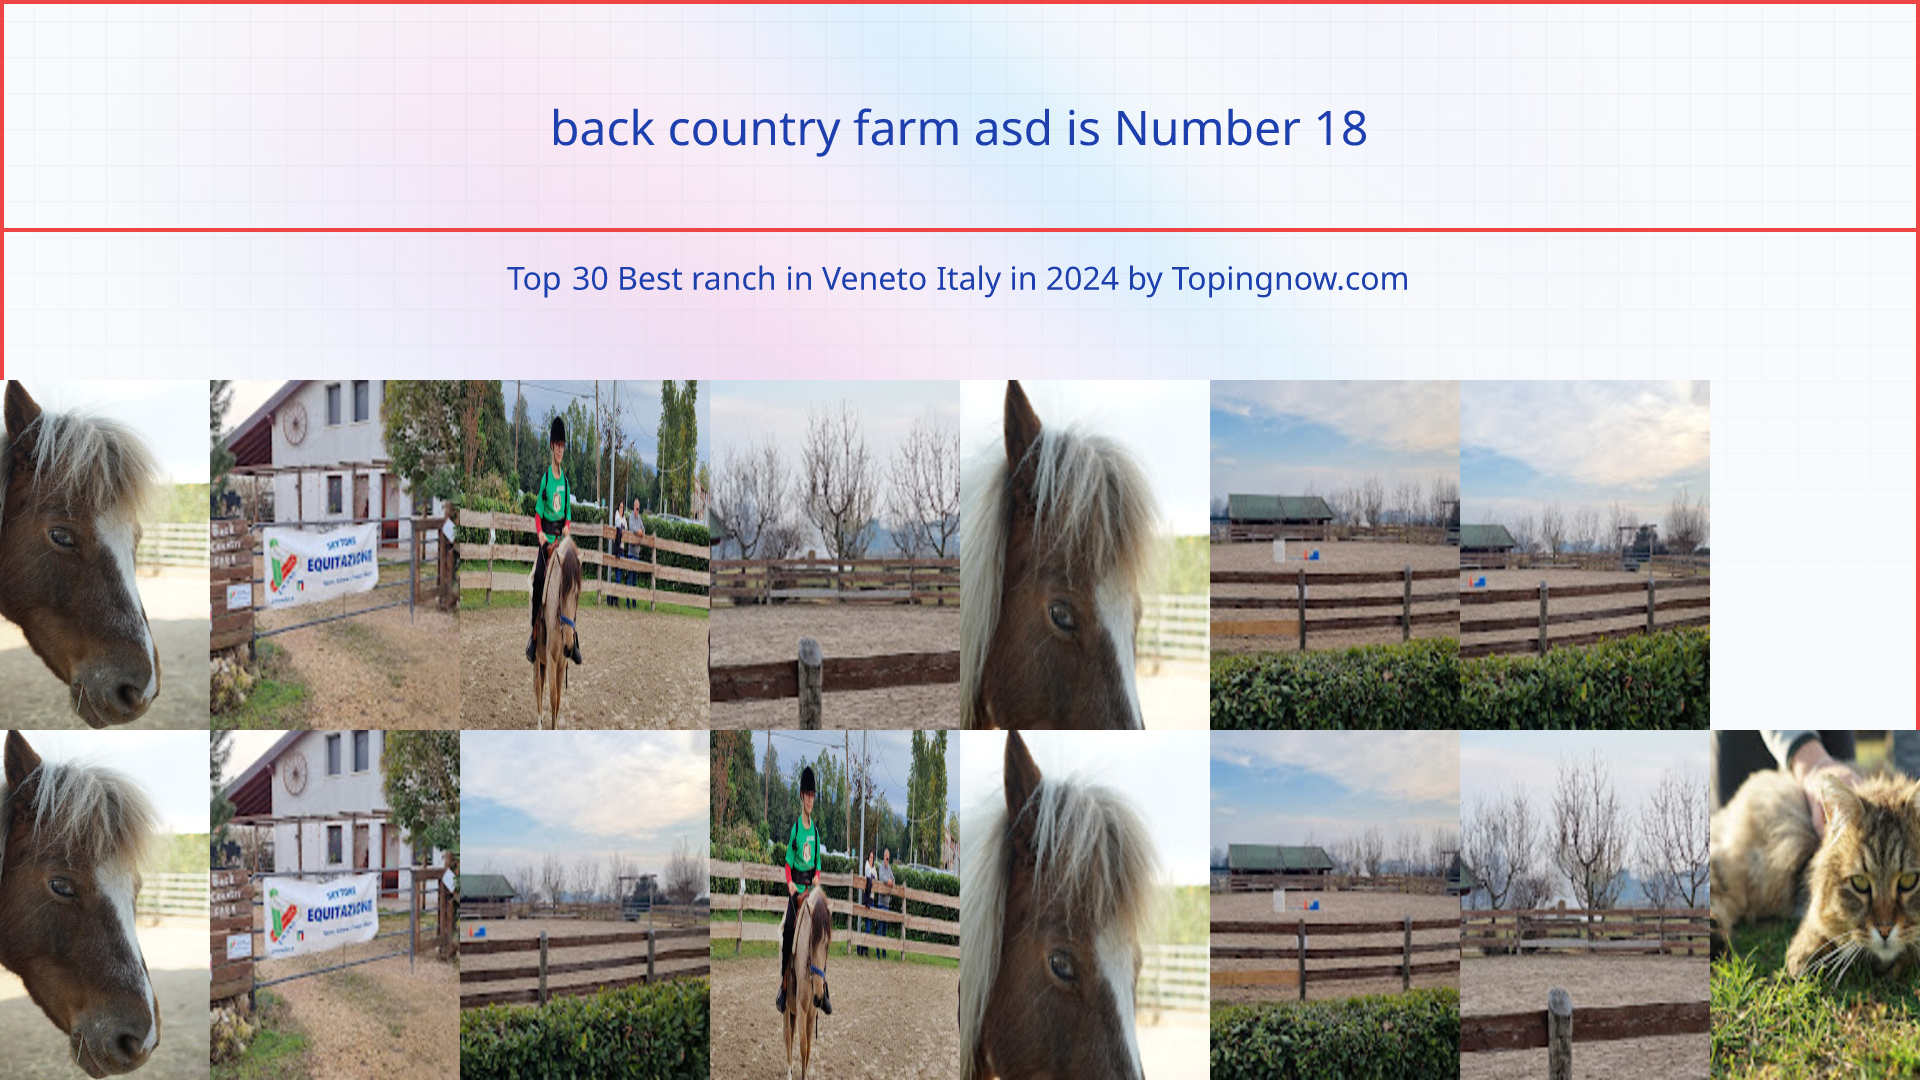 back country farm asd: Top 30 Best ranch in Veneto Italy in 2024